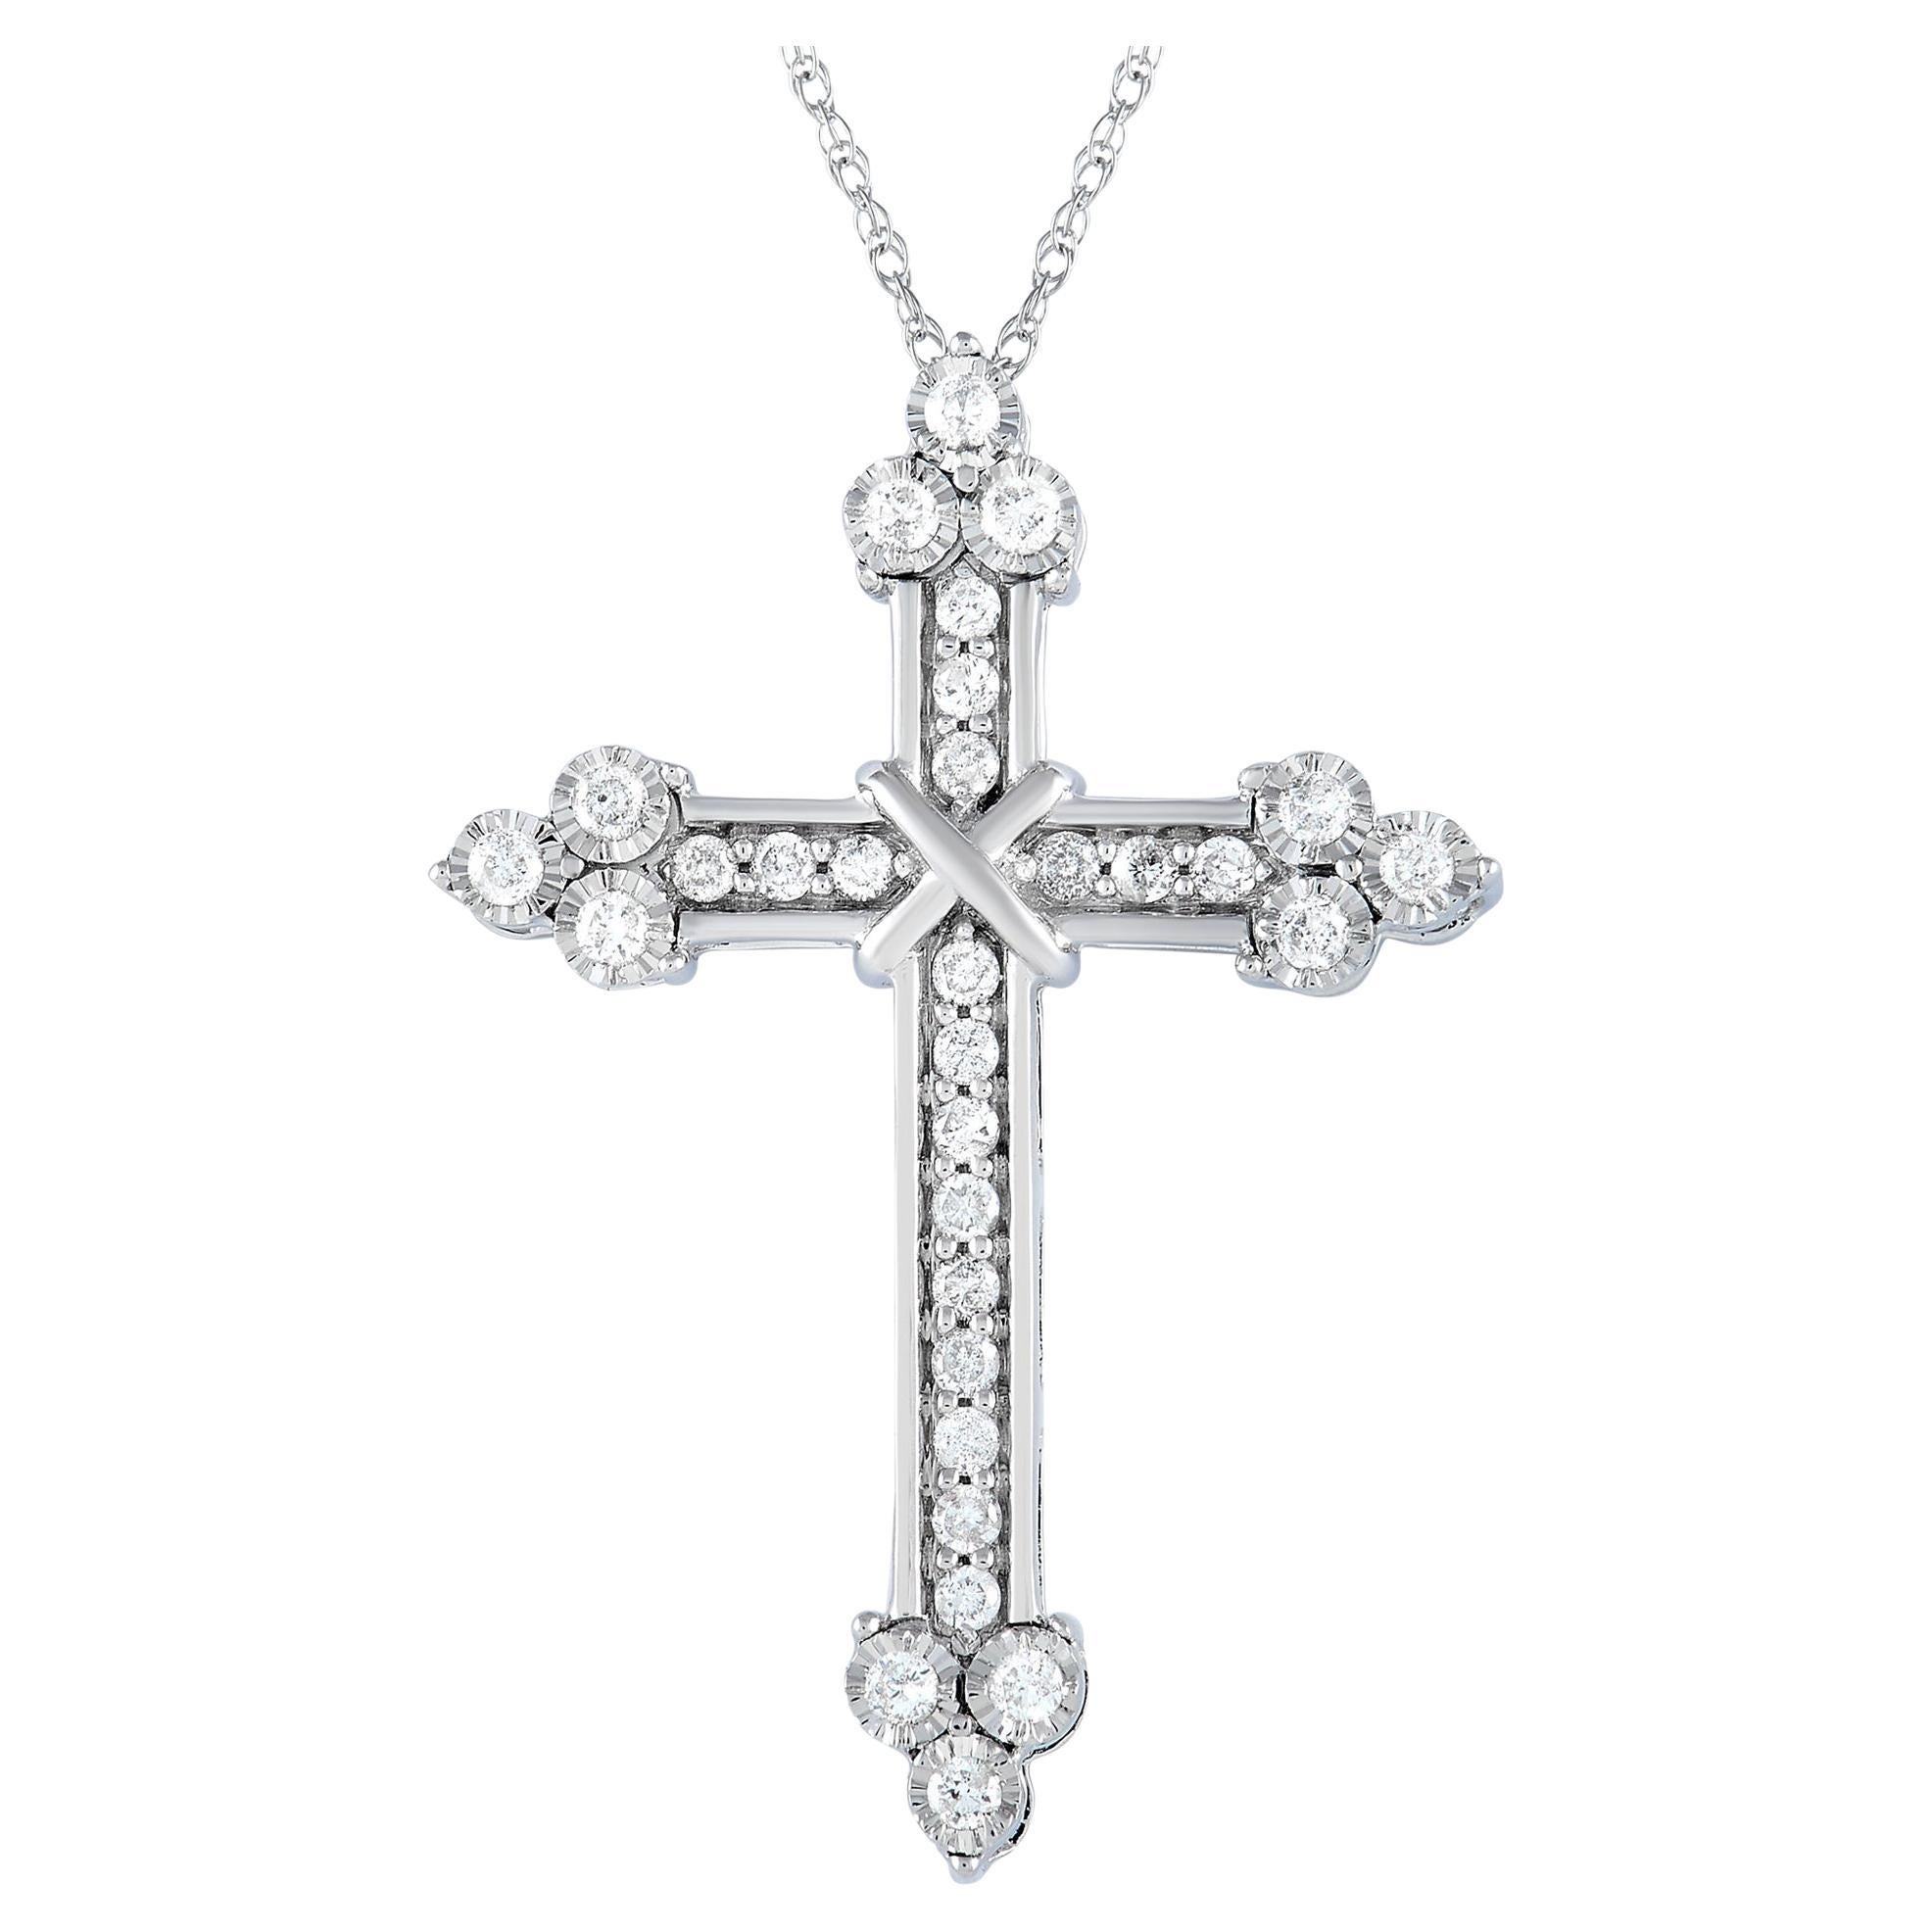 LB Exclusive 14K White Gold 0.65 ct Diamond Cross Pendant Necklace